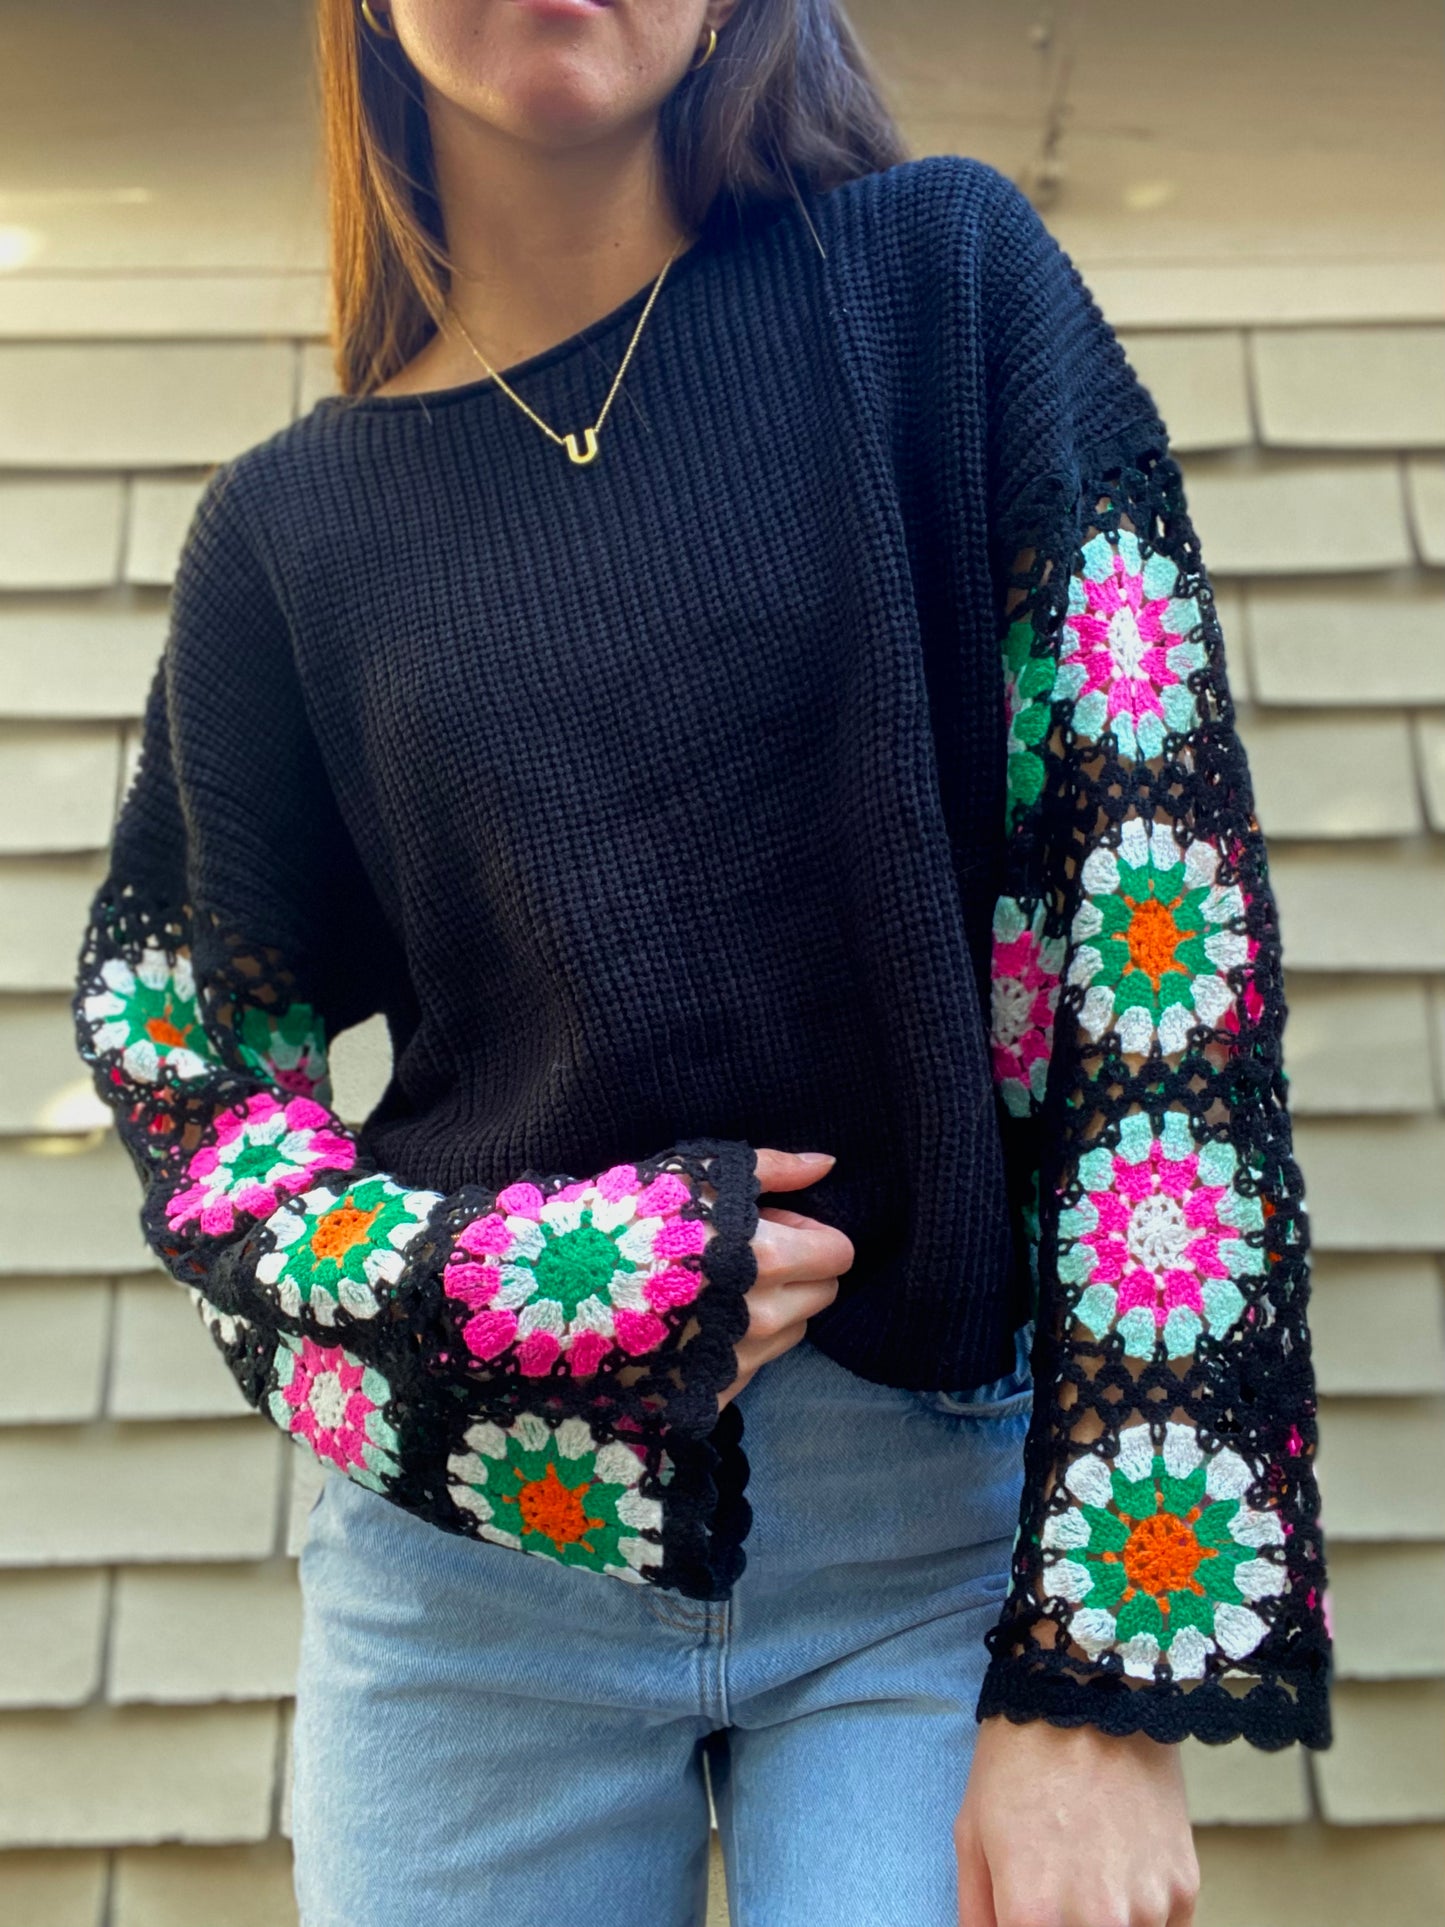 Retro Crochet Black Top With Flower Sleeves